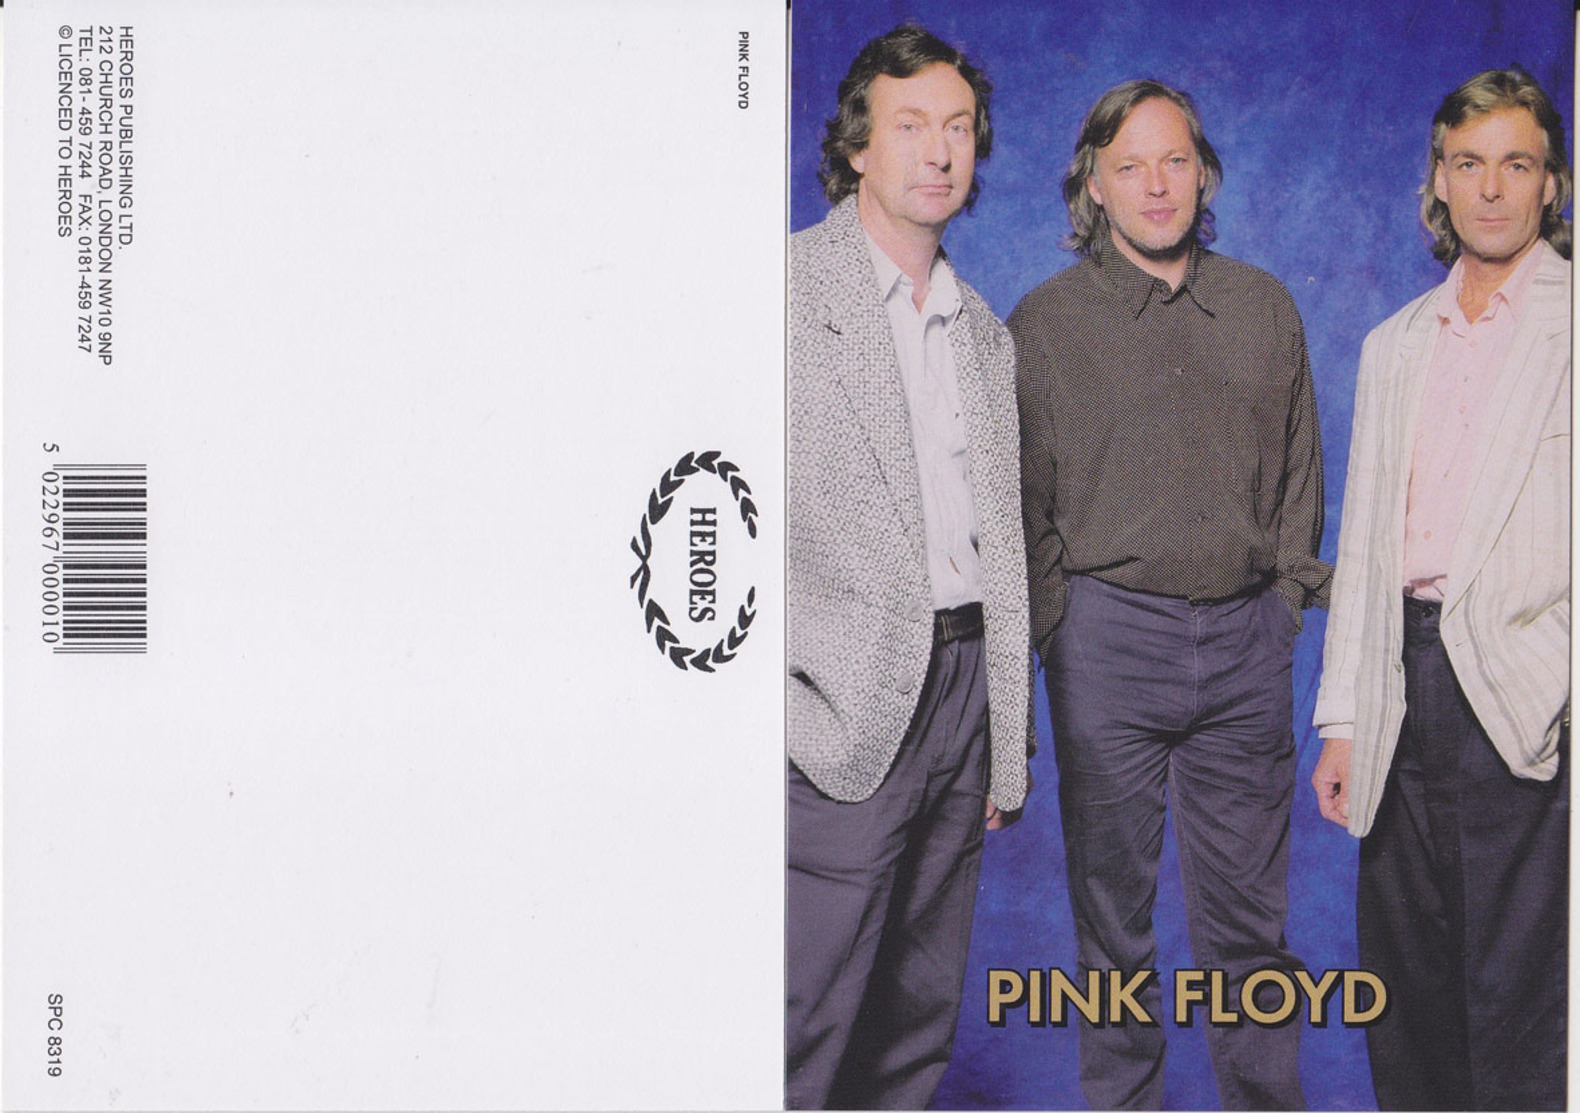 Pink Floyd Rock Band Original Postcard In Near Mint Condition. 004 - World